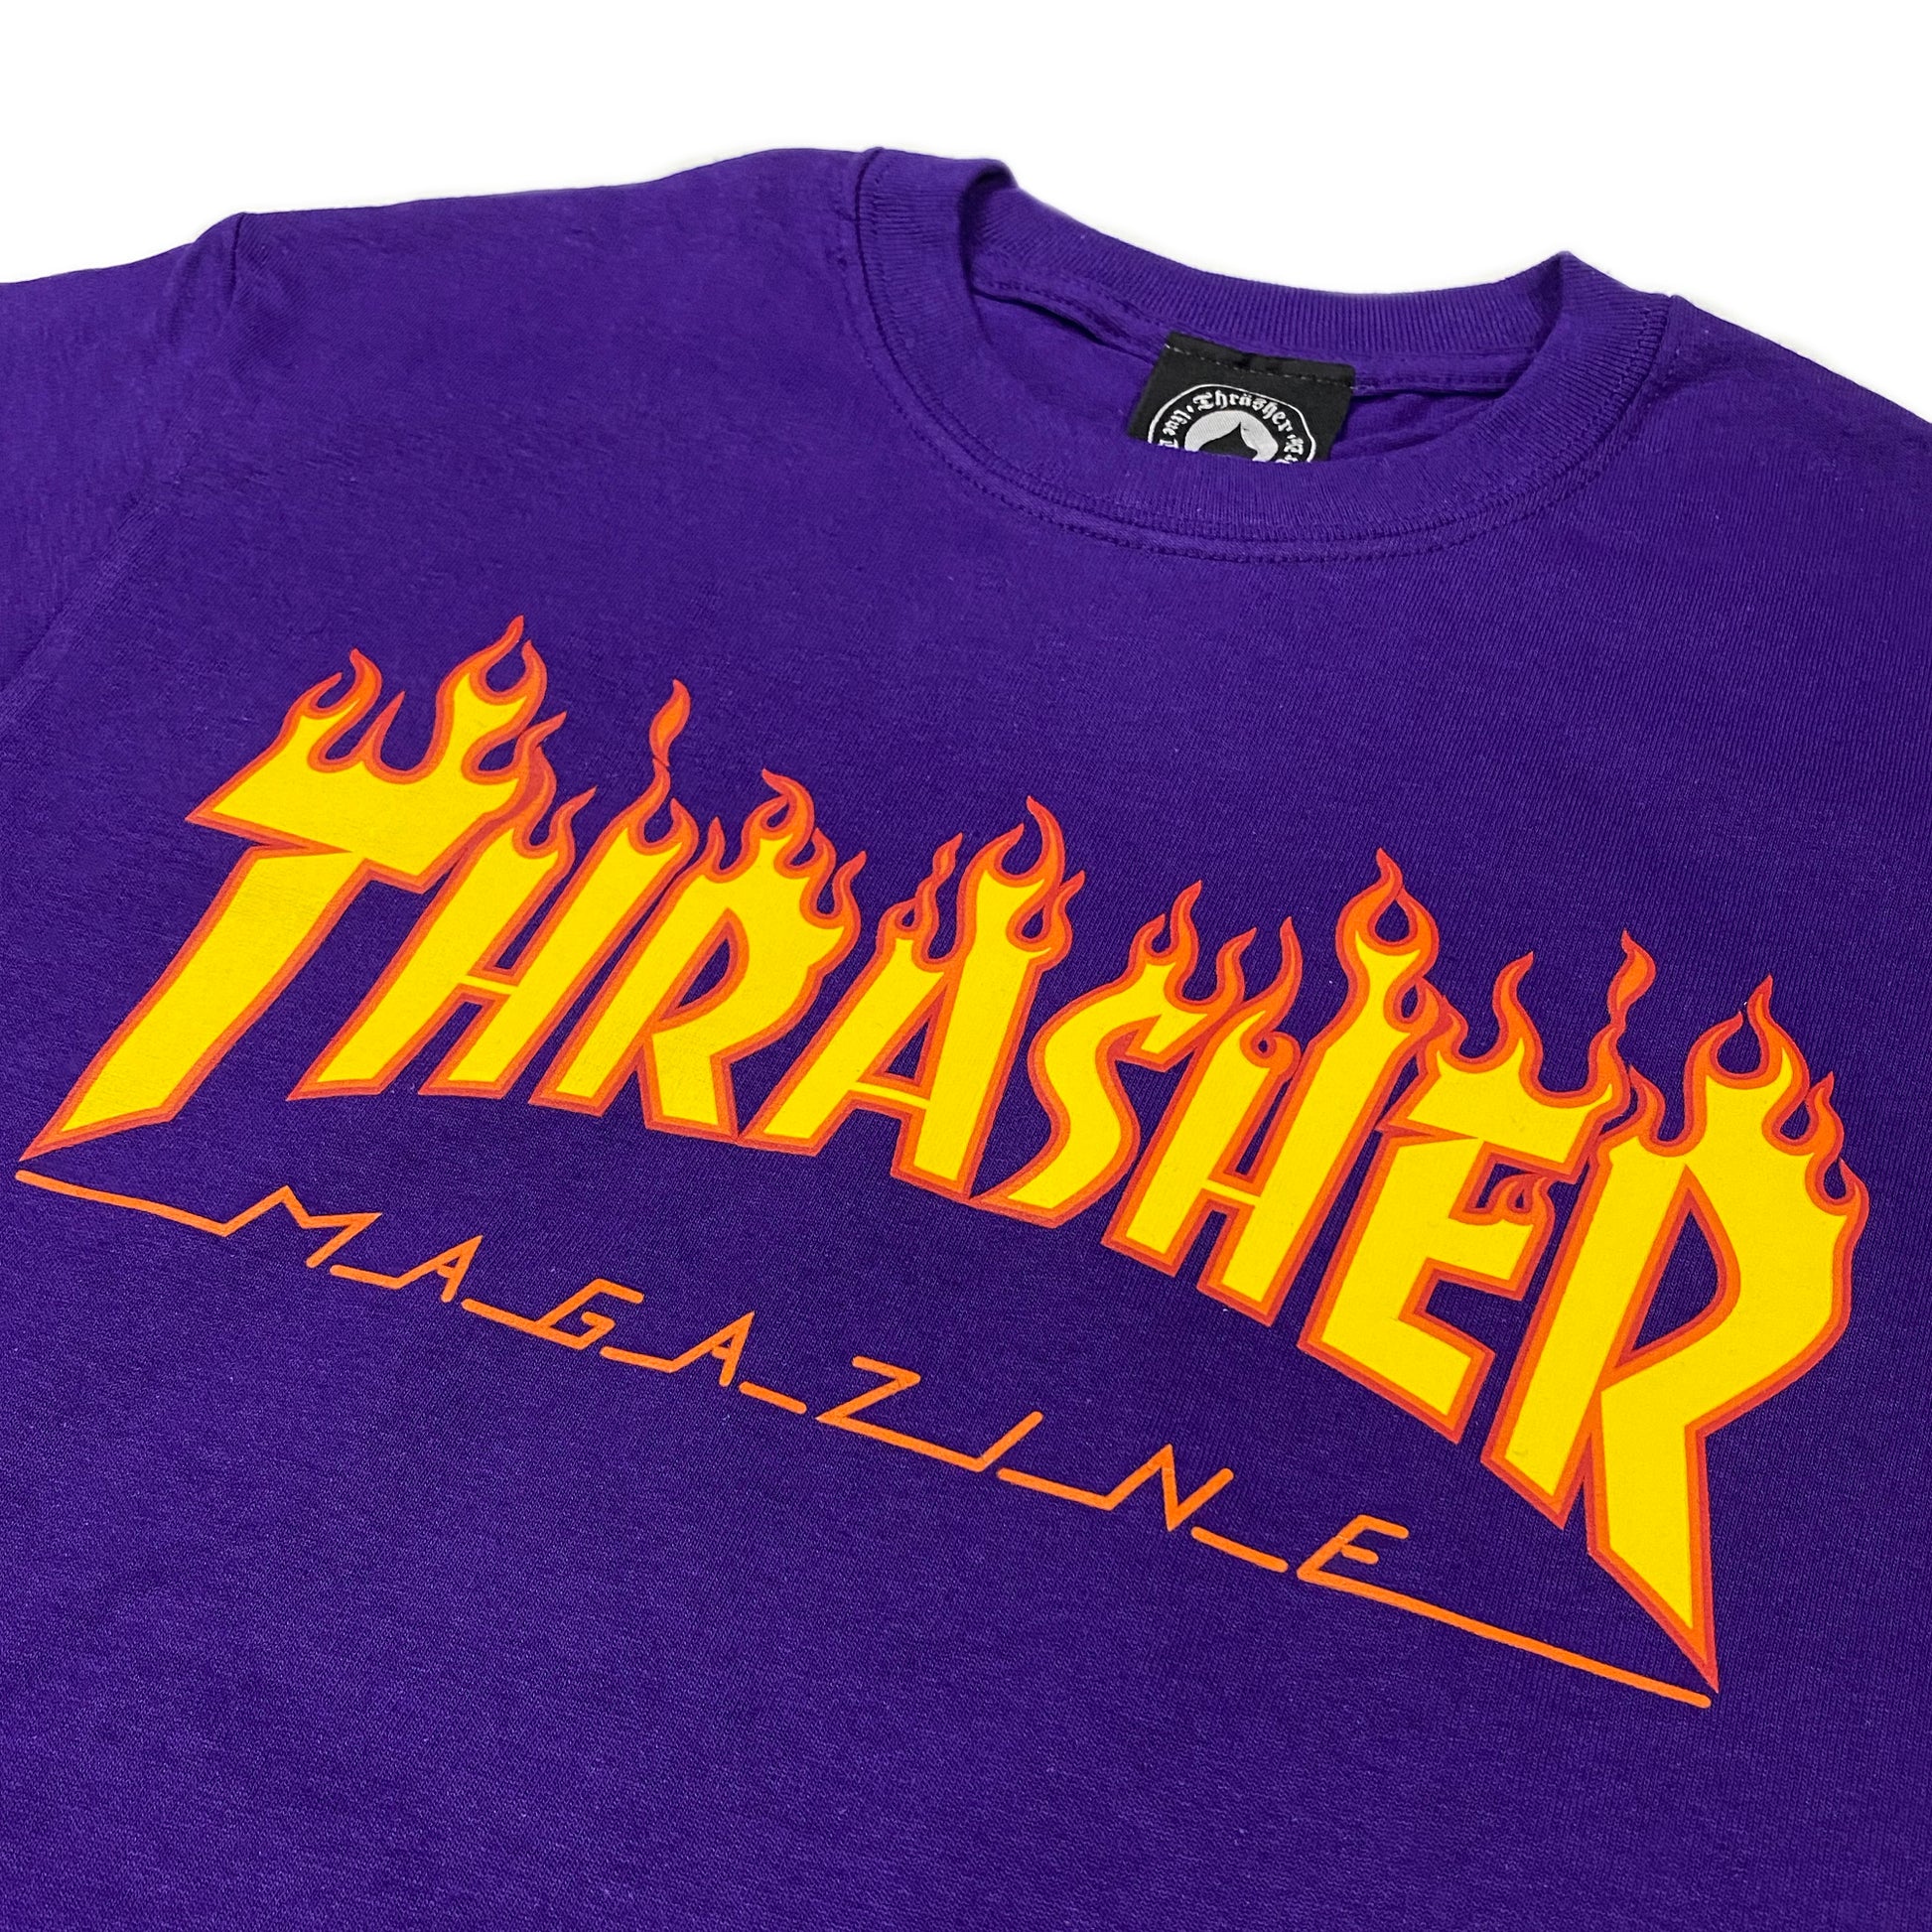 Thrasher Flame Logo T Shirt - Purple - Prime Delux Store